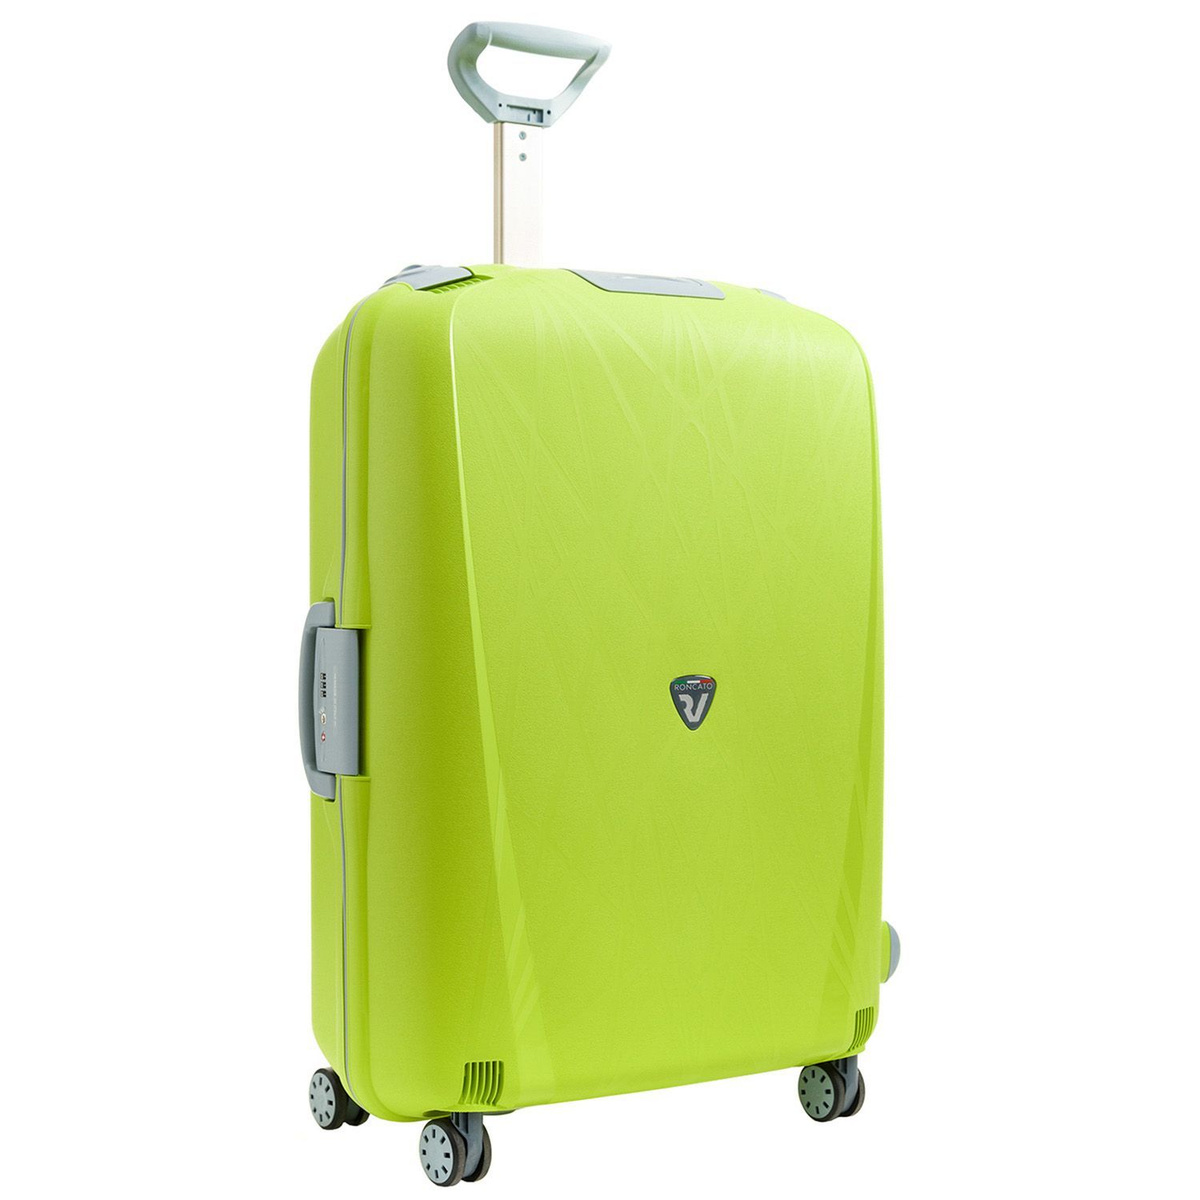 Габариты чемодана: 53x75x30 см Вес чемодана: 4,80 кг Объём чемодана: 109 л